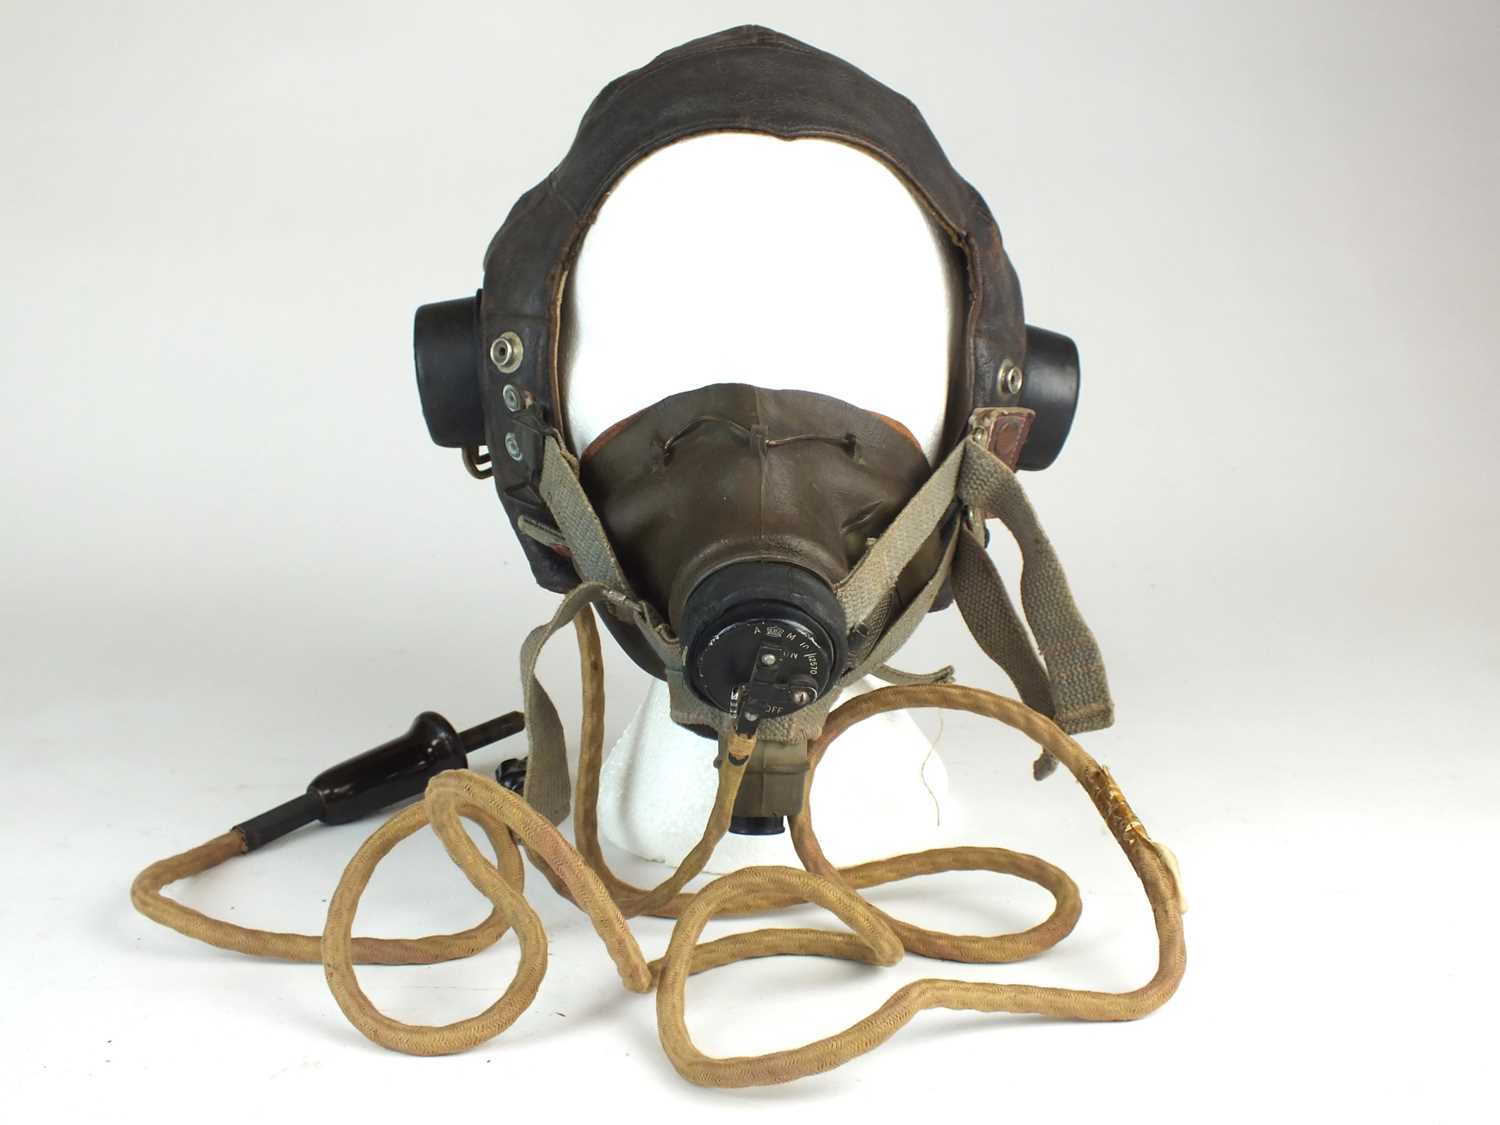 Lot British Second World War C-Type flying helmet with Type-G oxygen mask